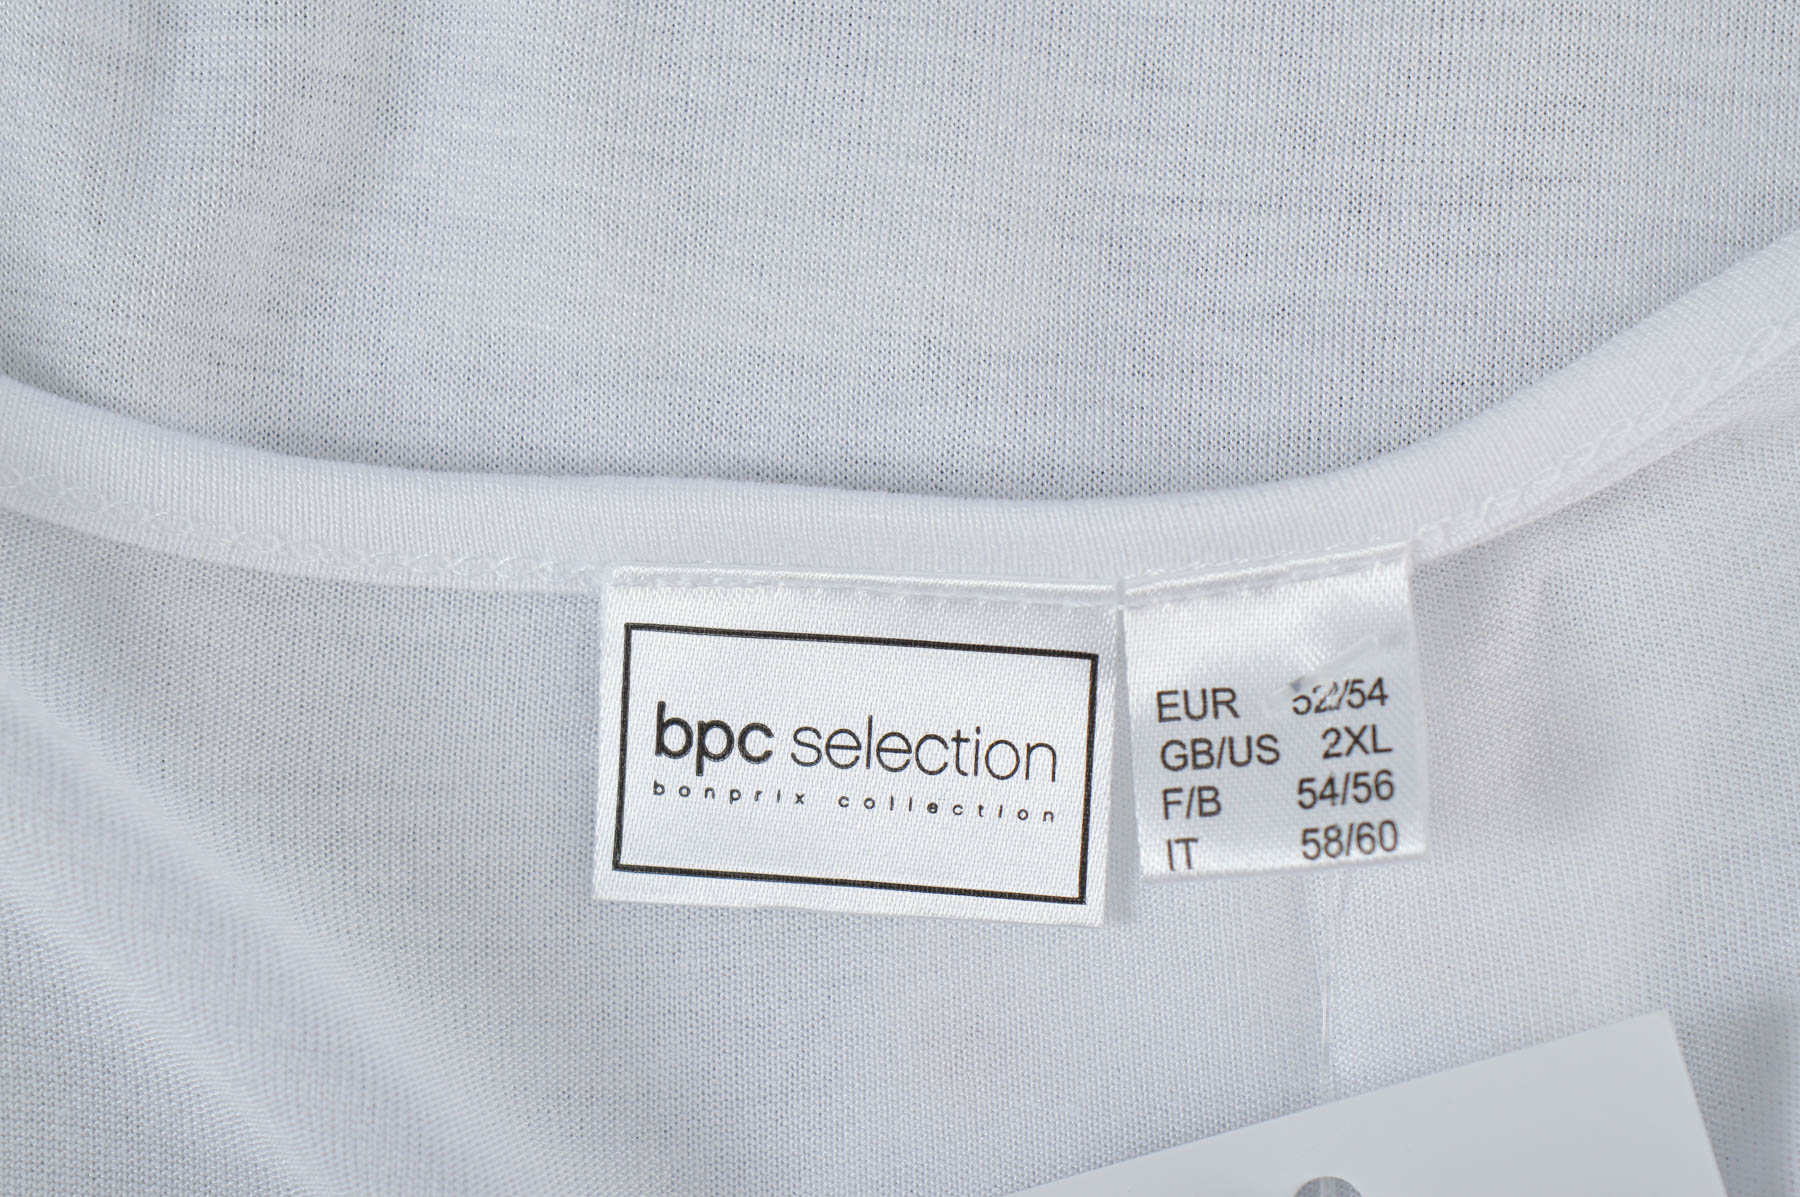 Women's tunic - Bpc selection bonprix collection - 2